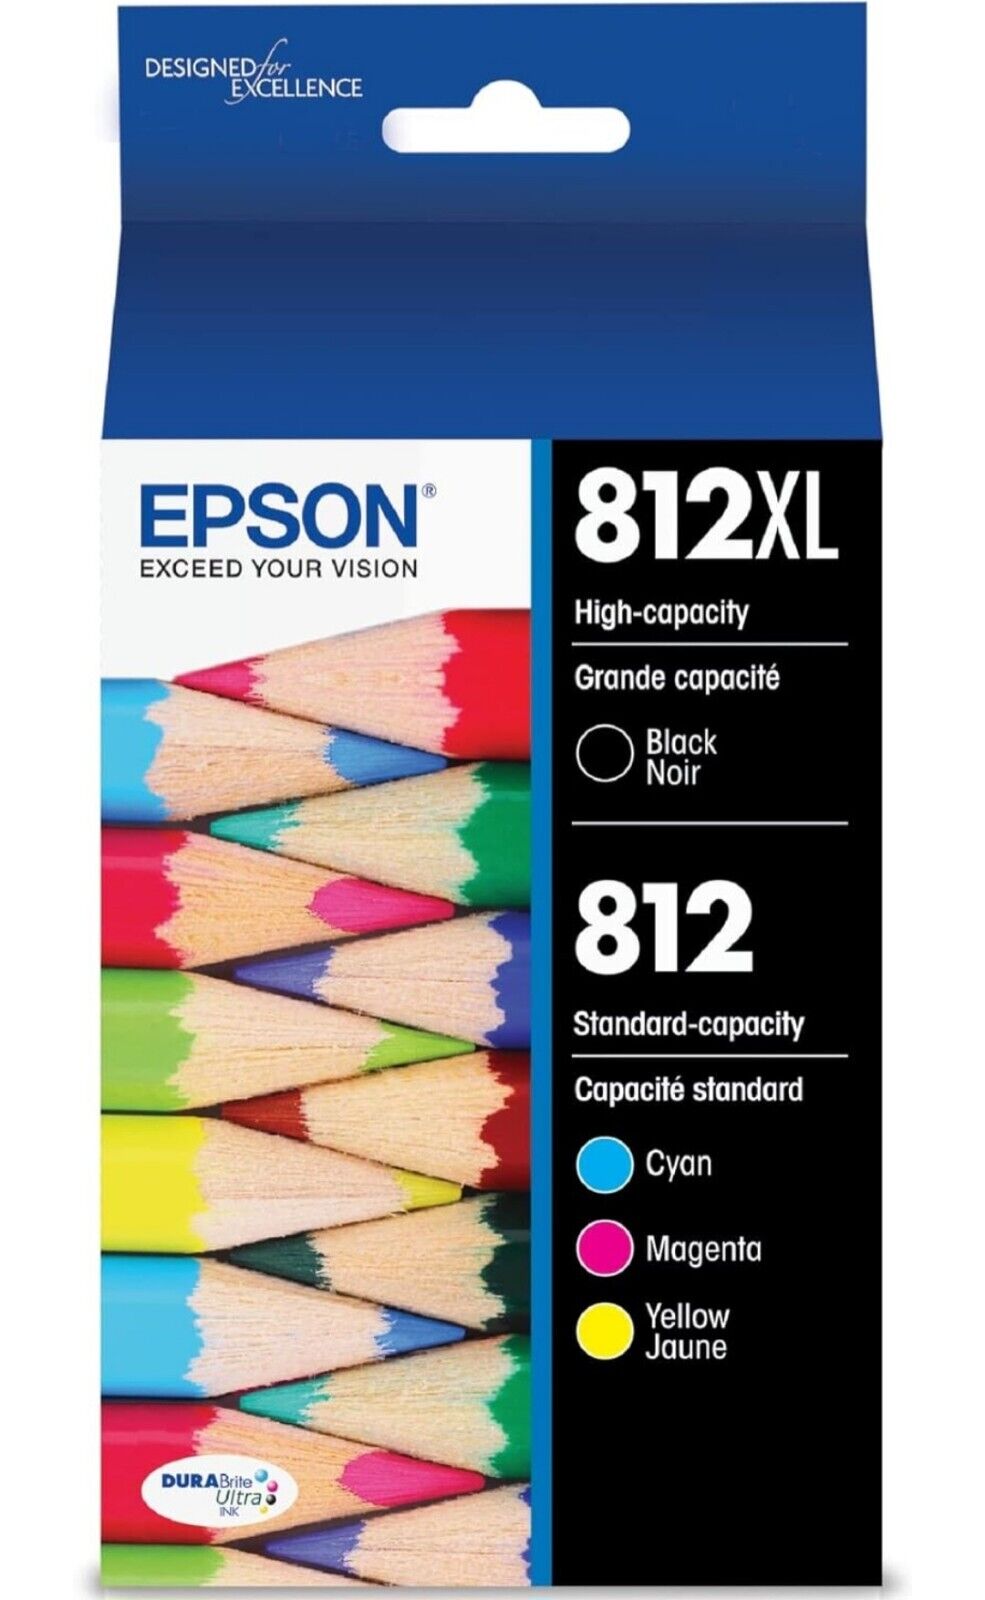 Epson 812XL High-Capacity Black + 812 Color Cyan/Magenta/Yellow Expires 08/2026